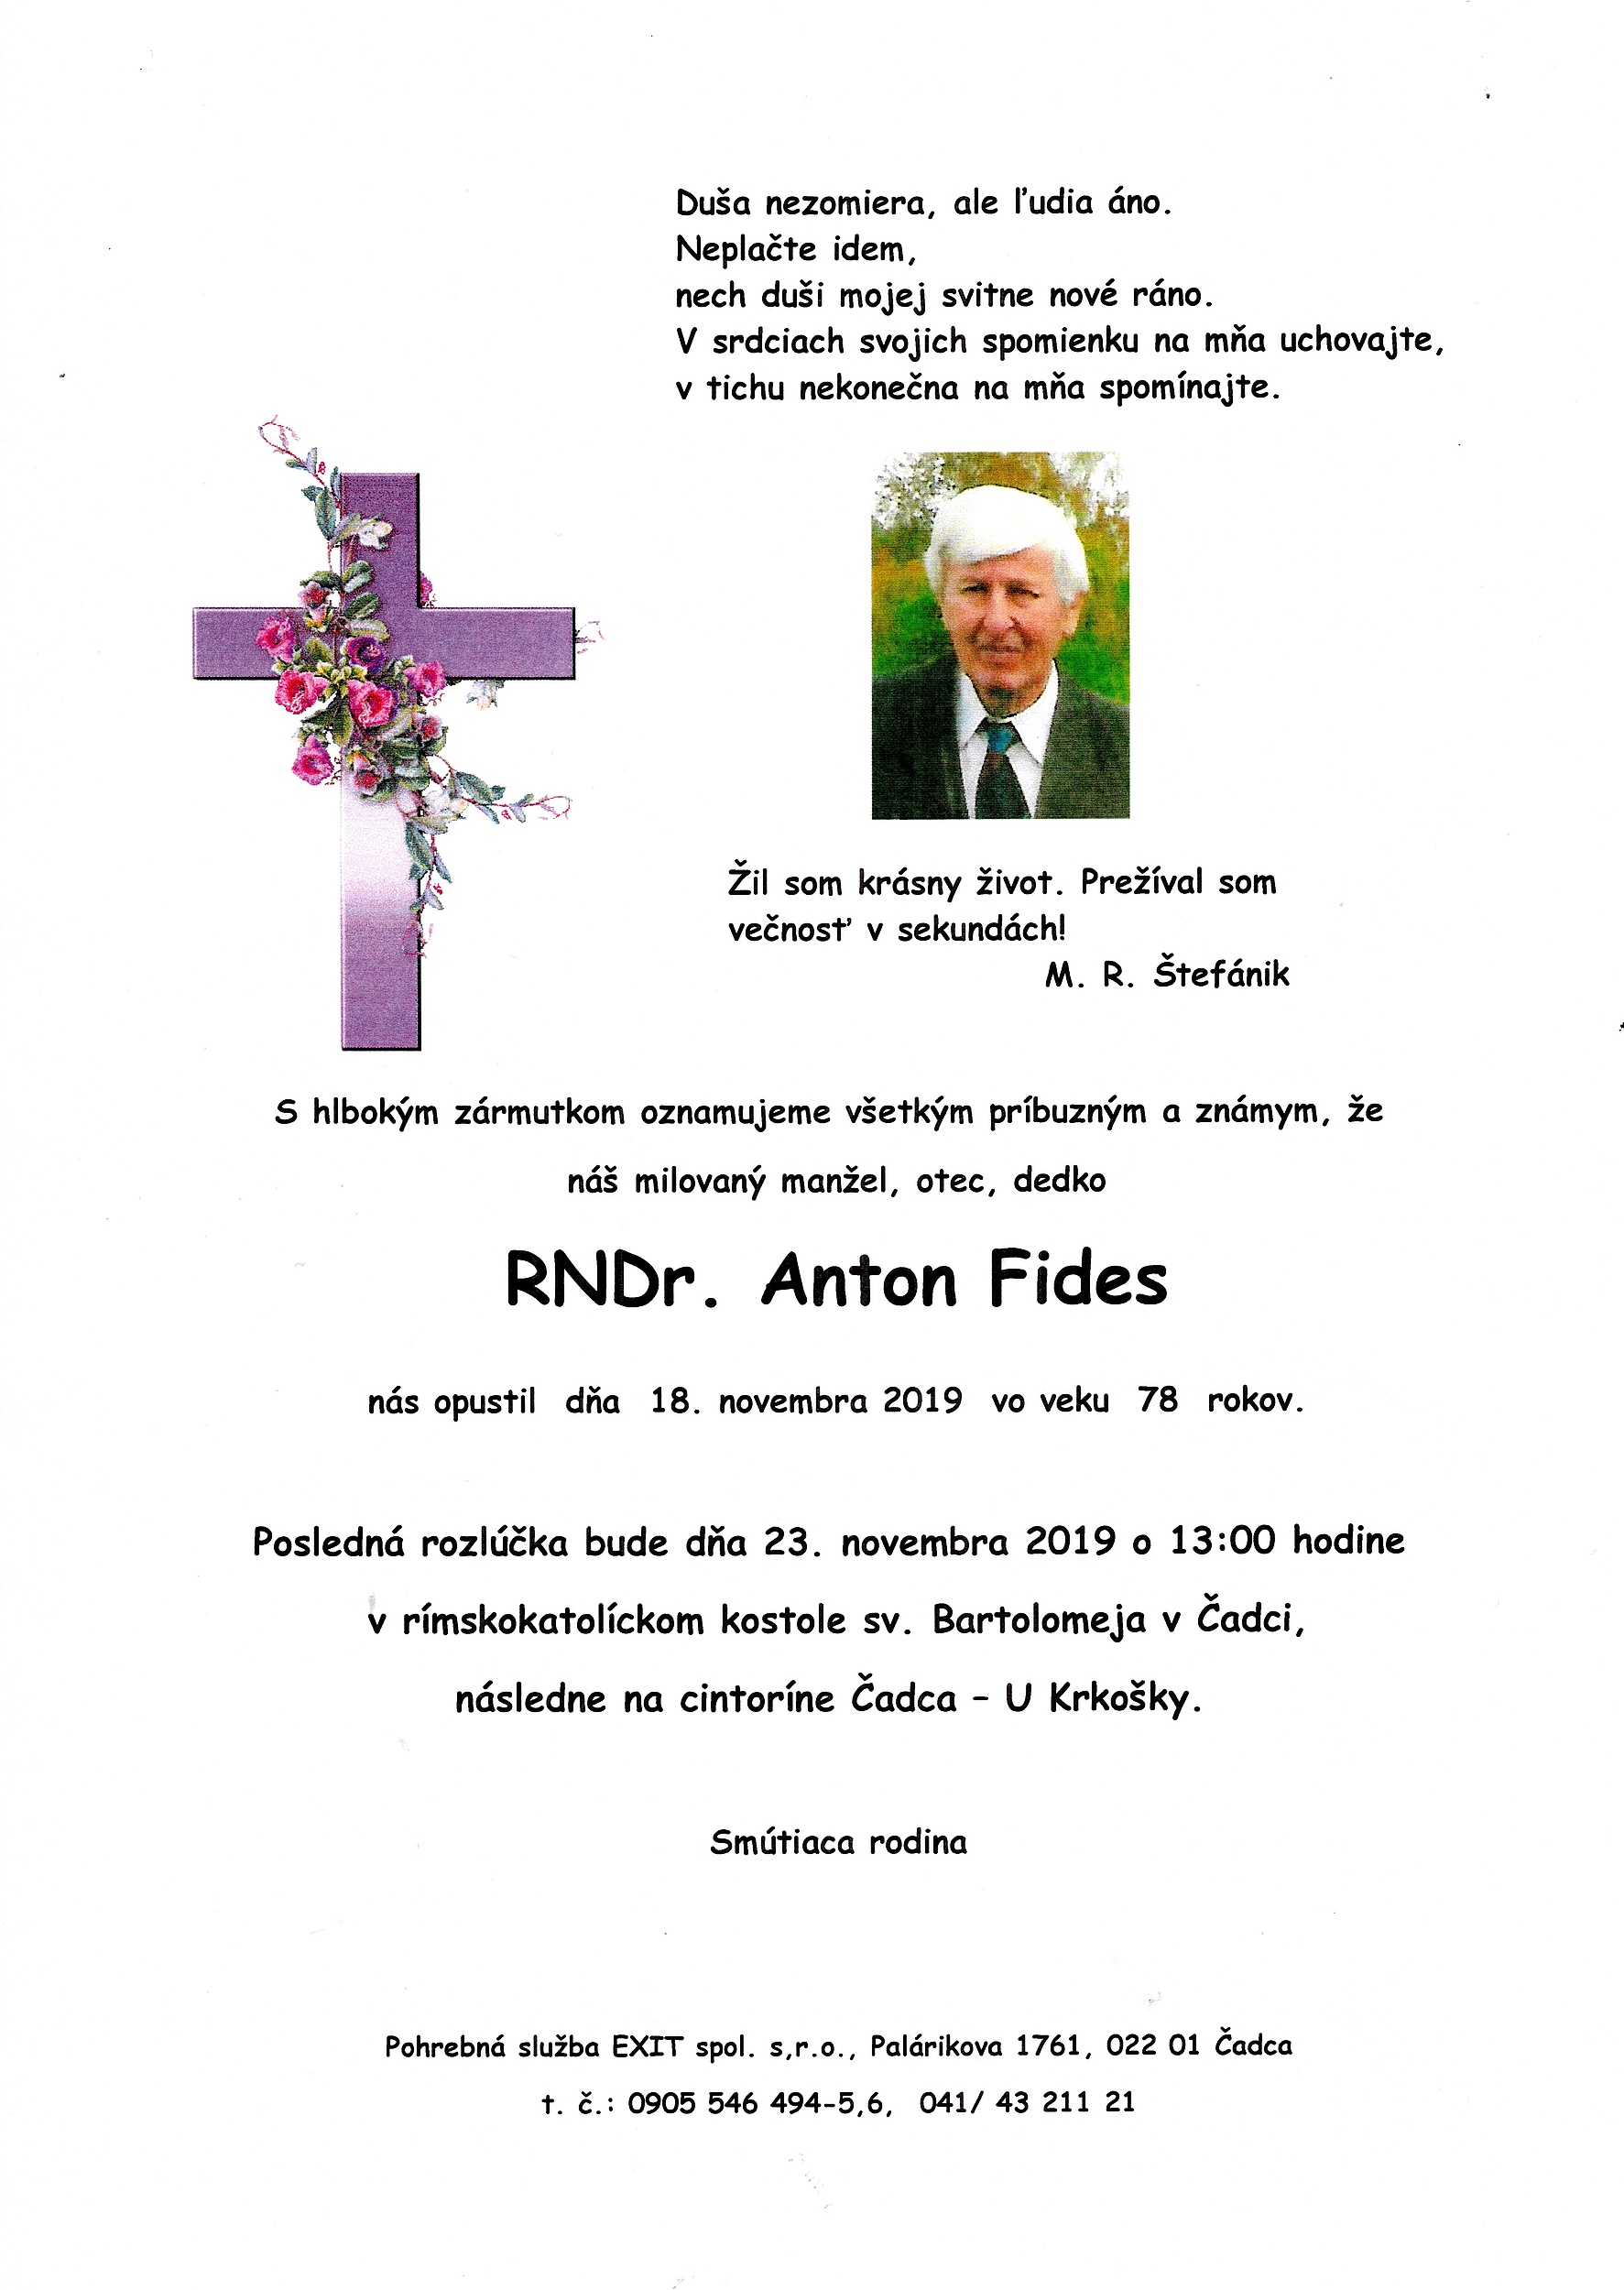 Anton Fides - parte